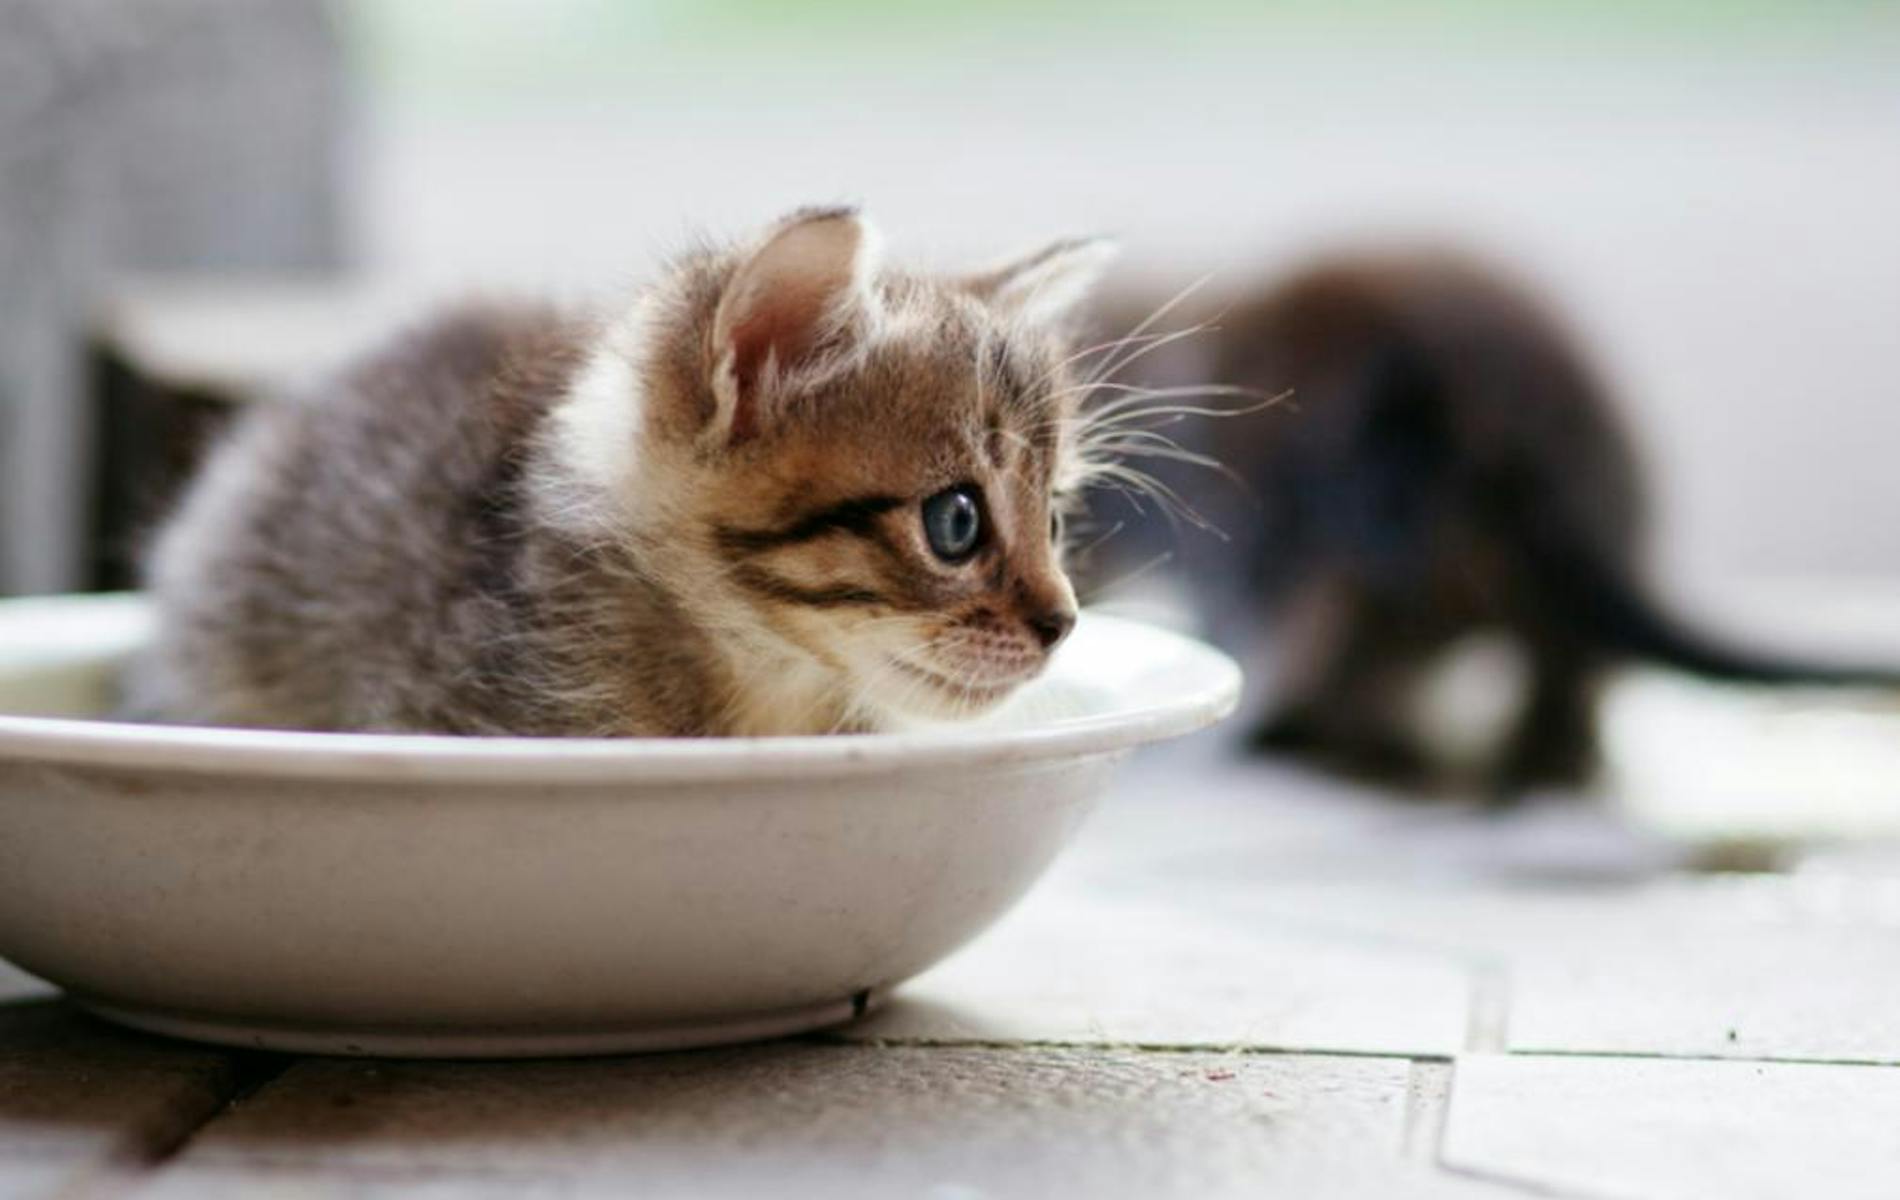 Kitten in saucer